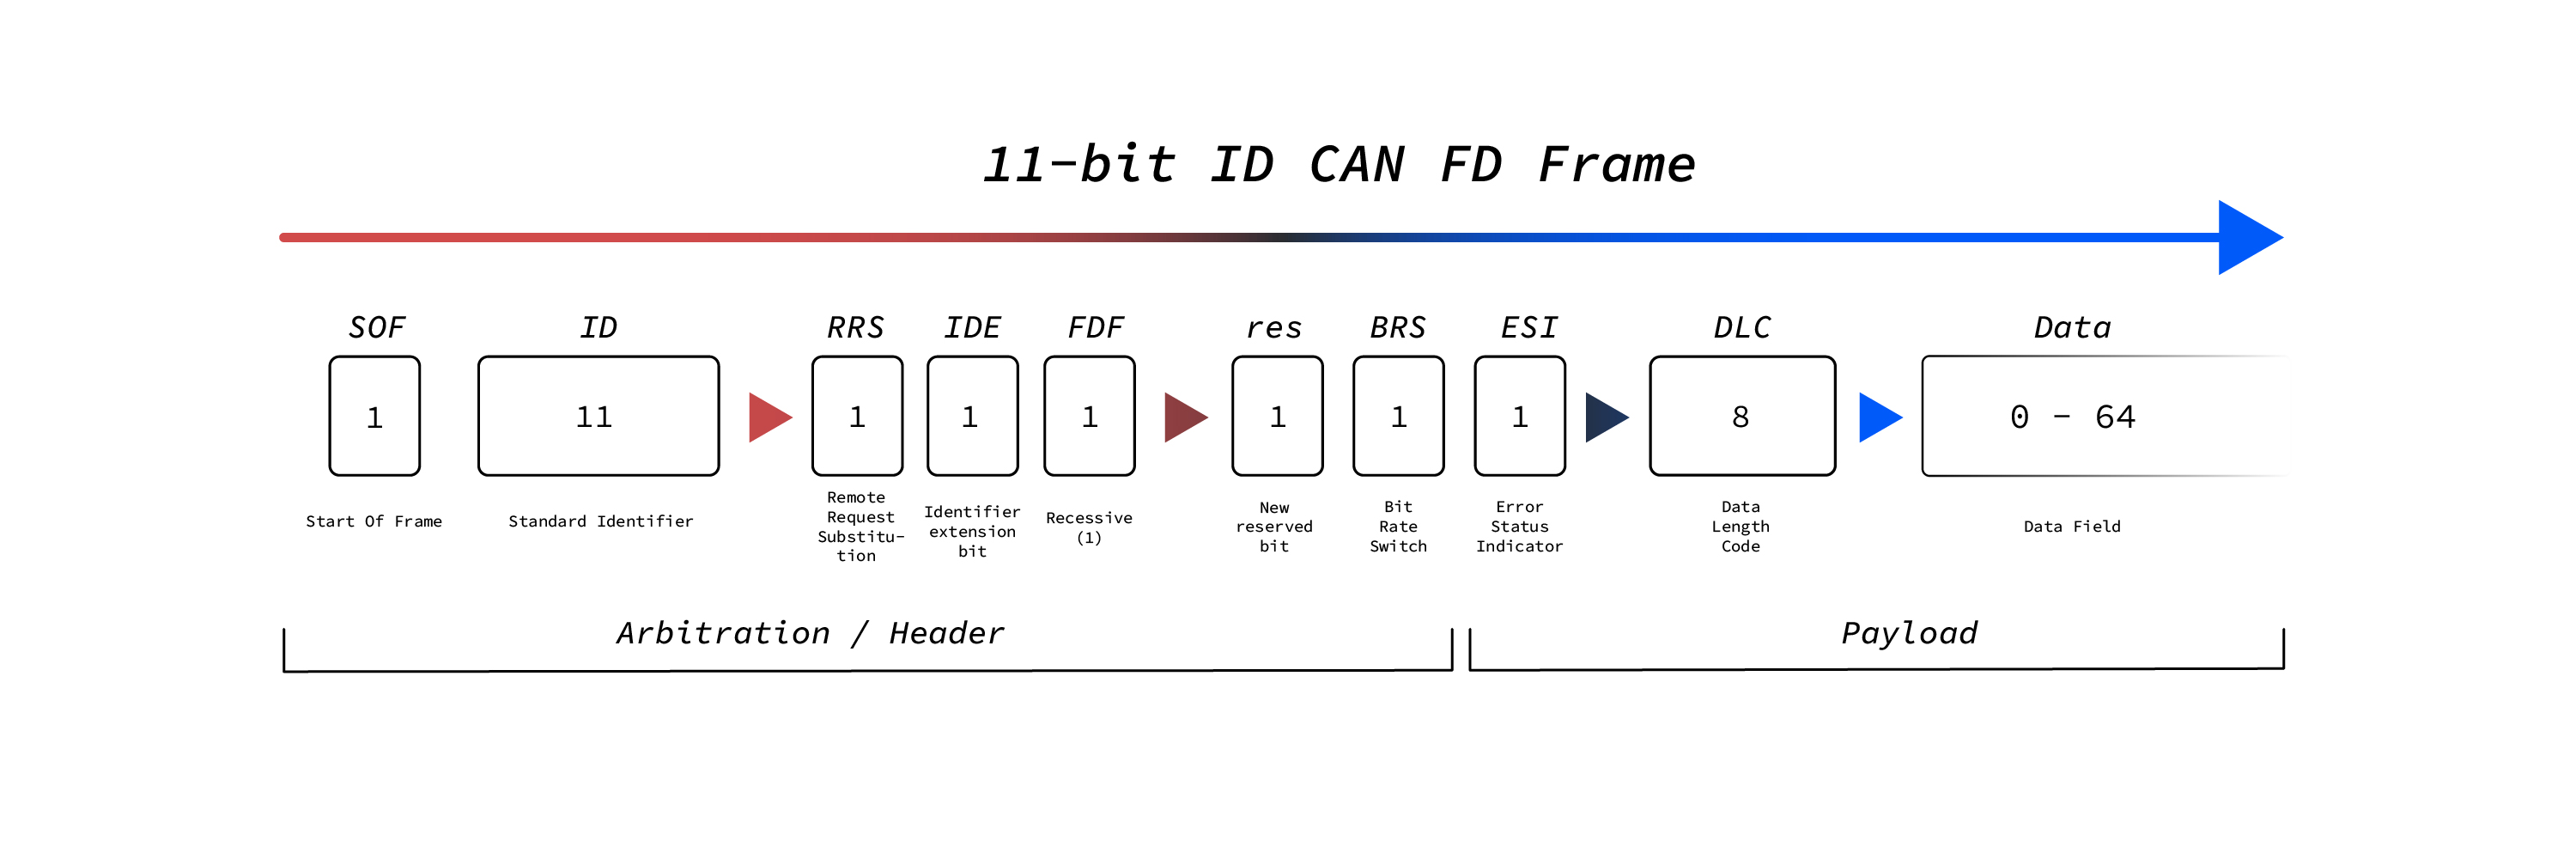 11-bit ID CAN FD frame